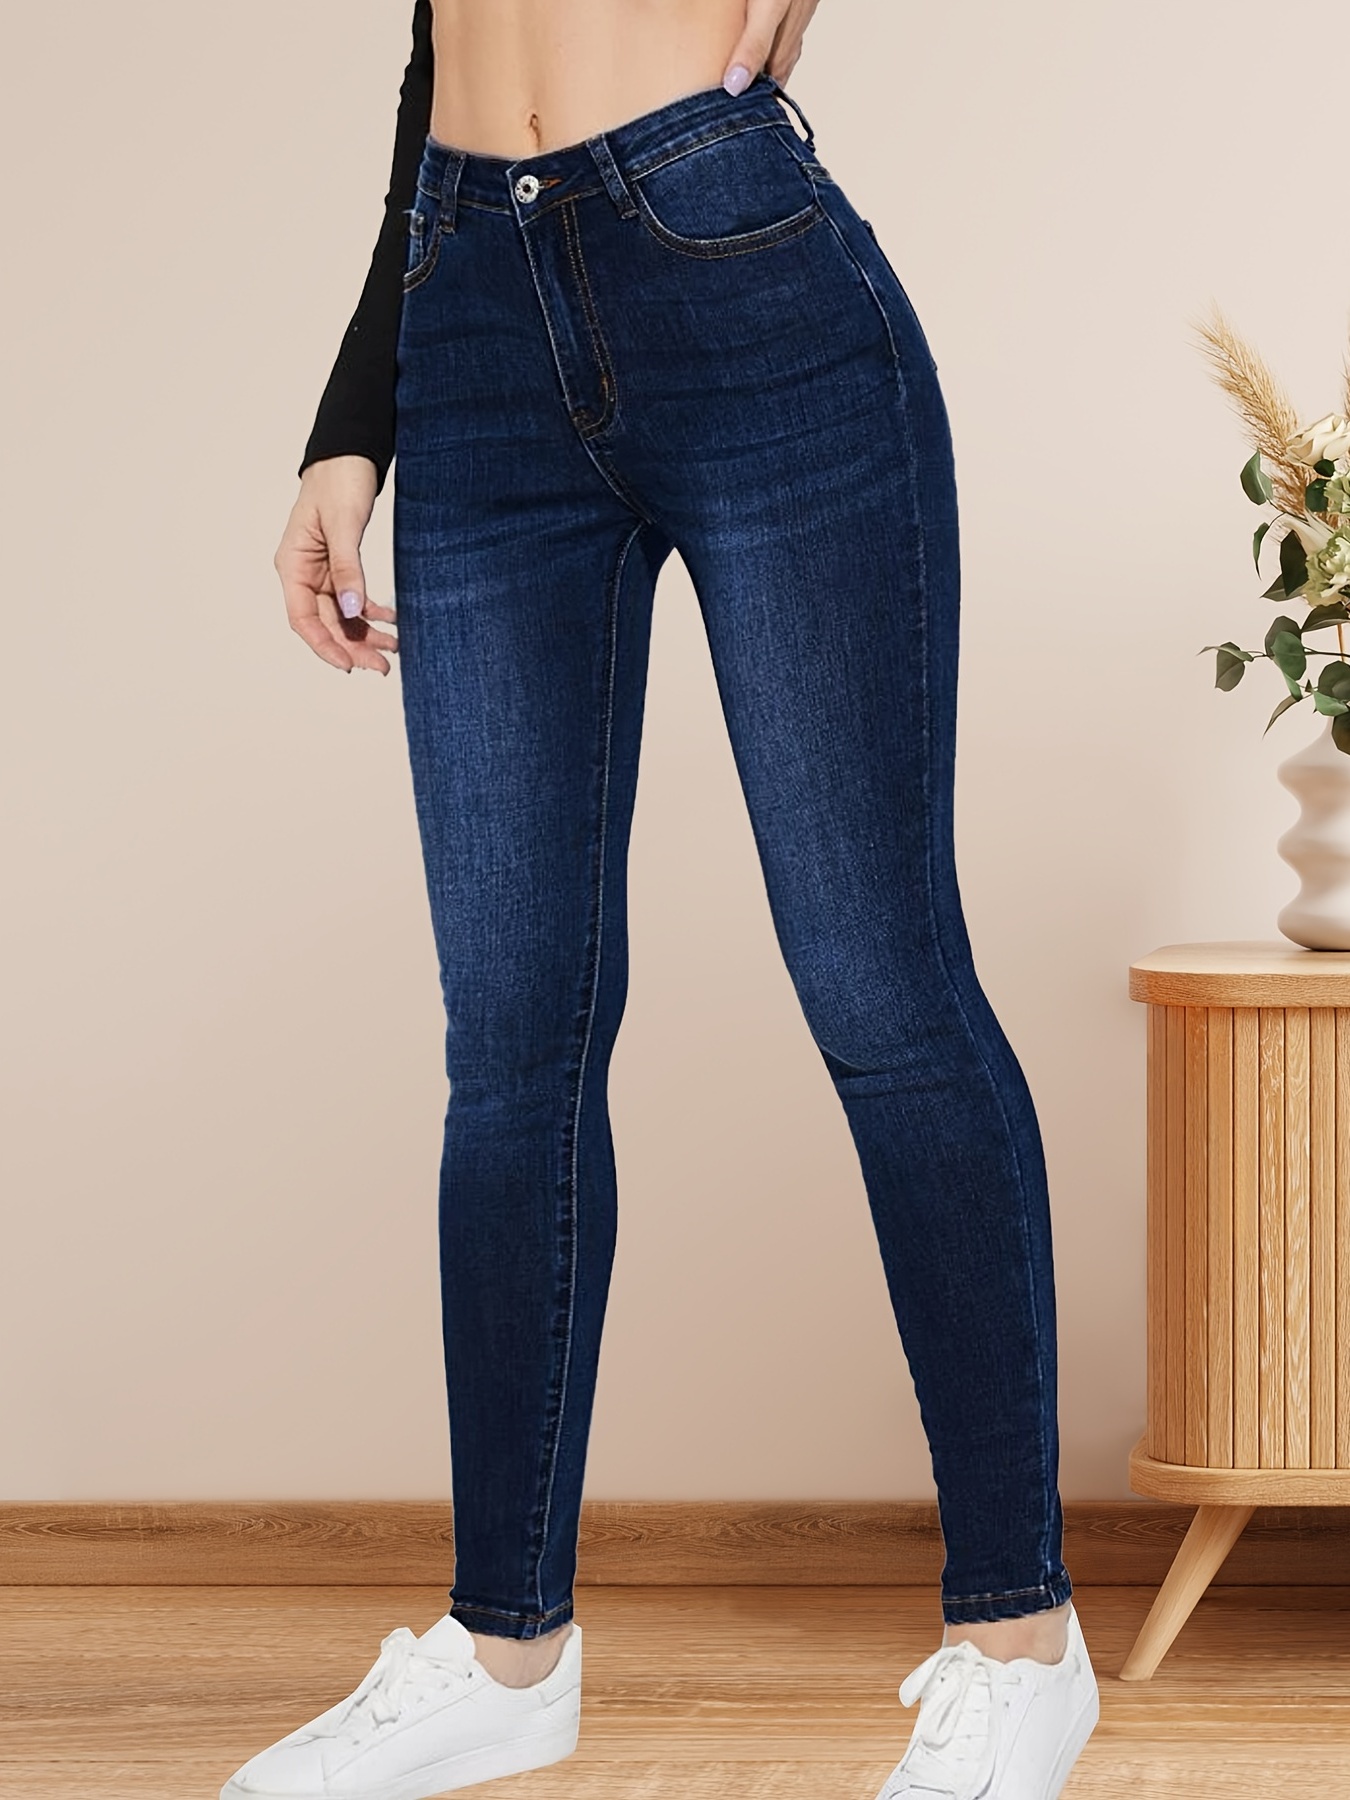 Jeans De Jeans Femeninos Jeans Jeans Altos De La Cintura Ancha De 23,86 €